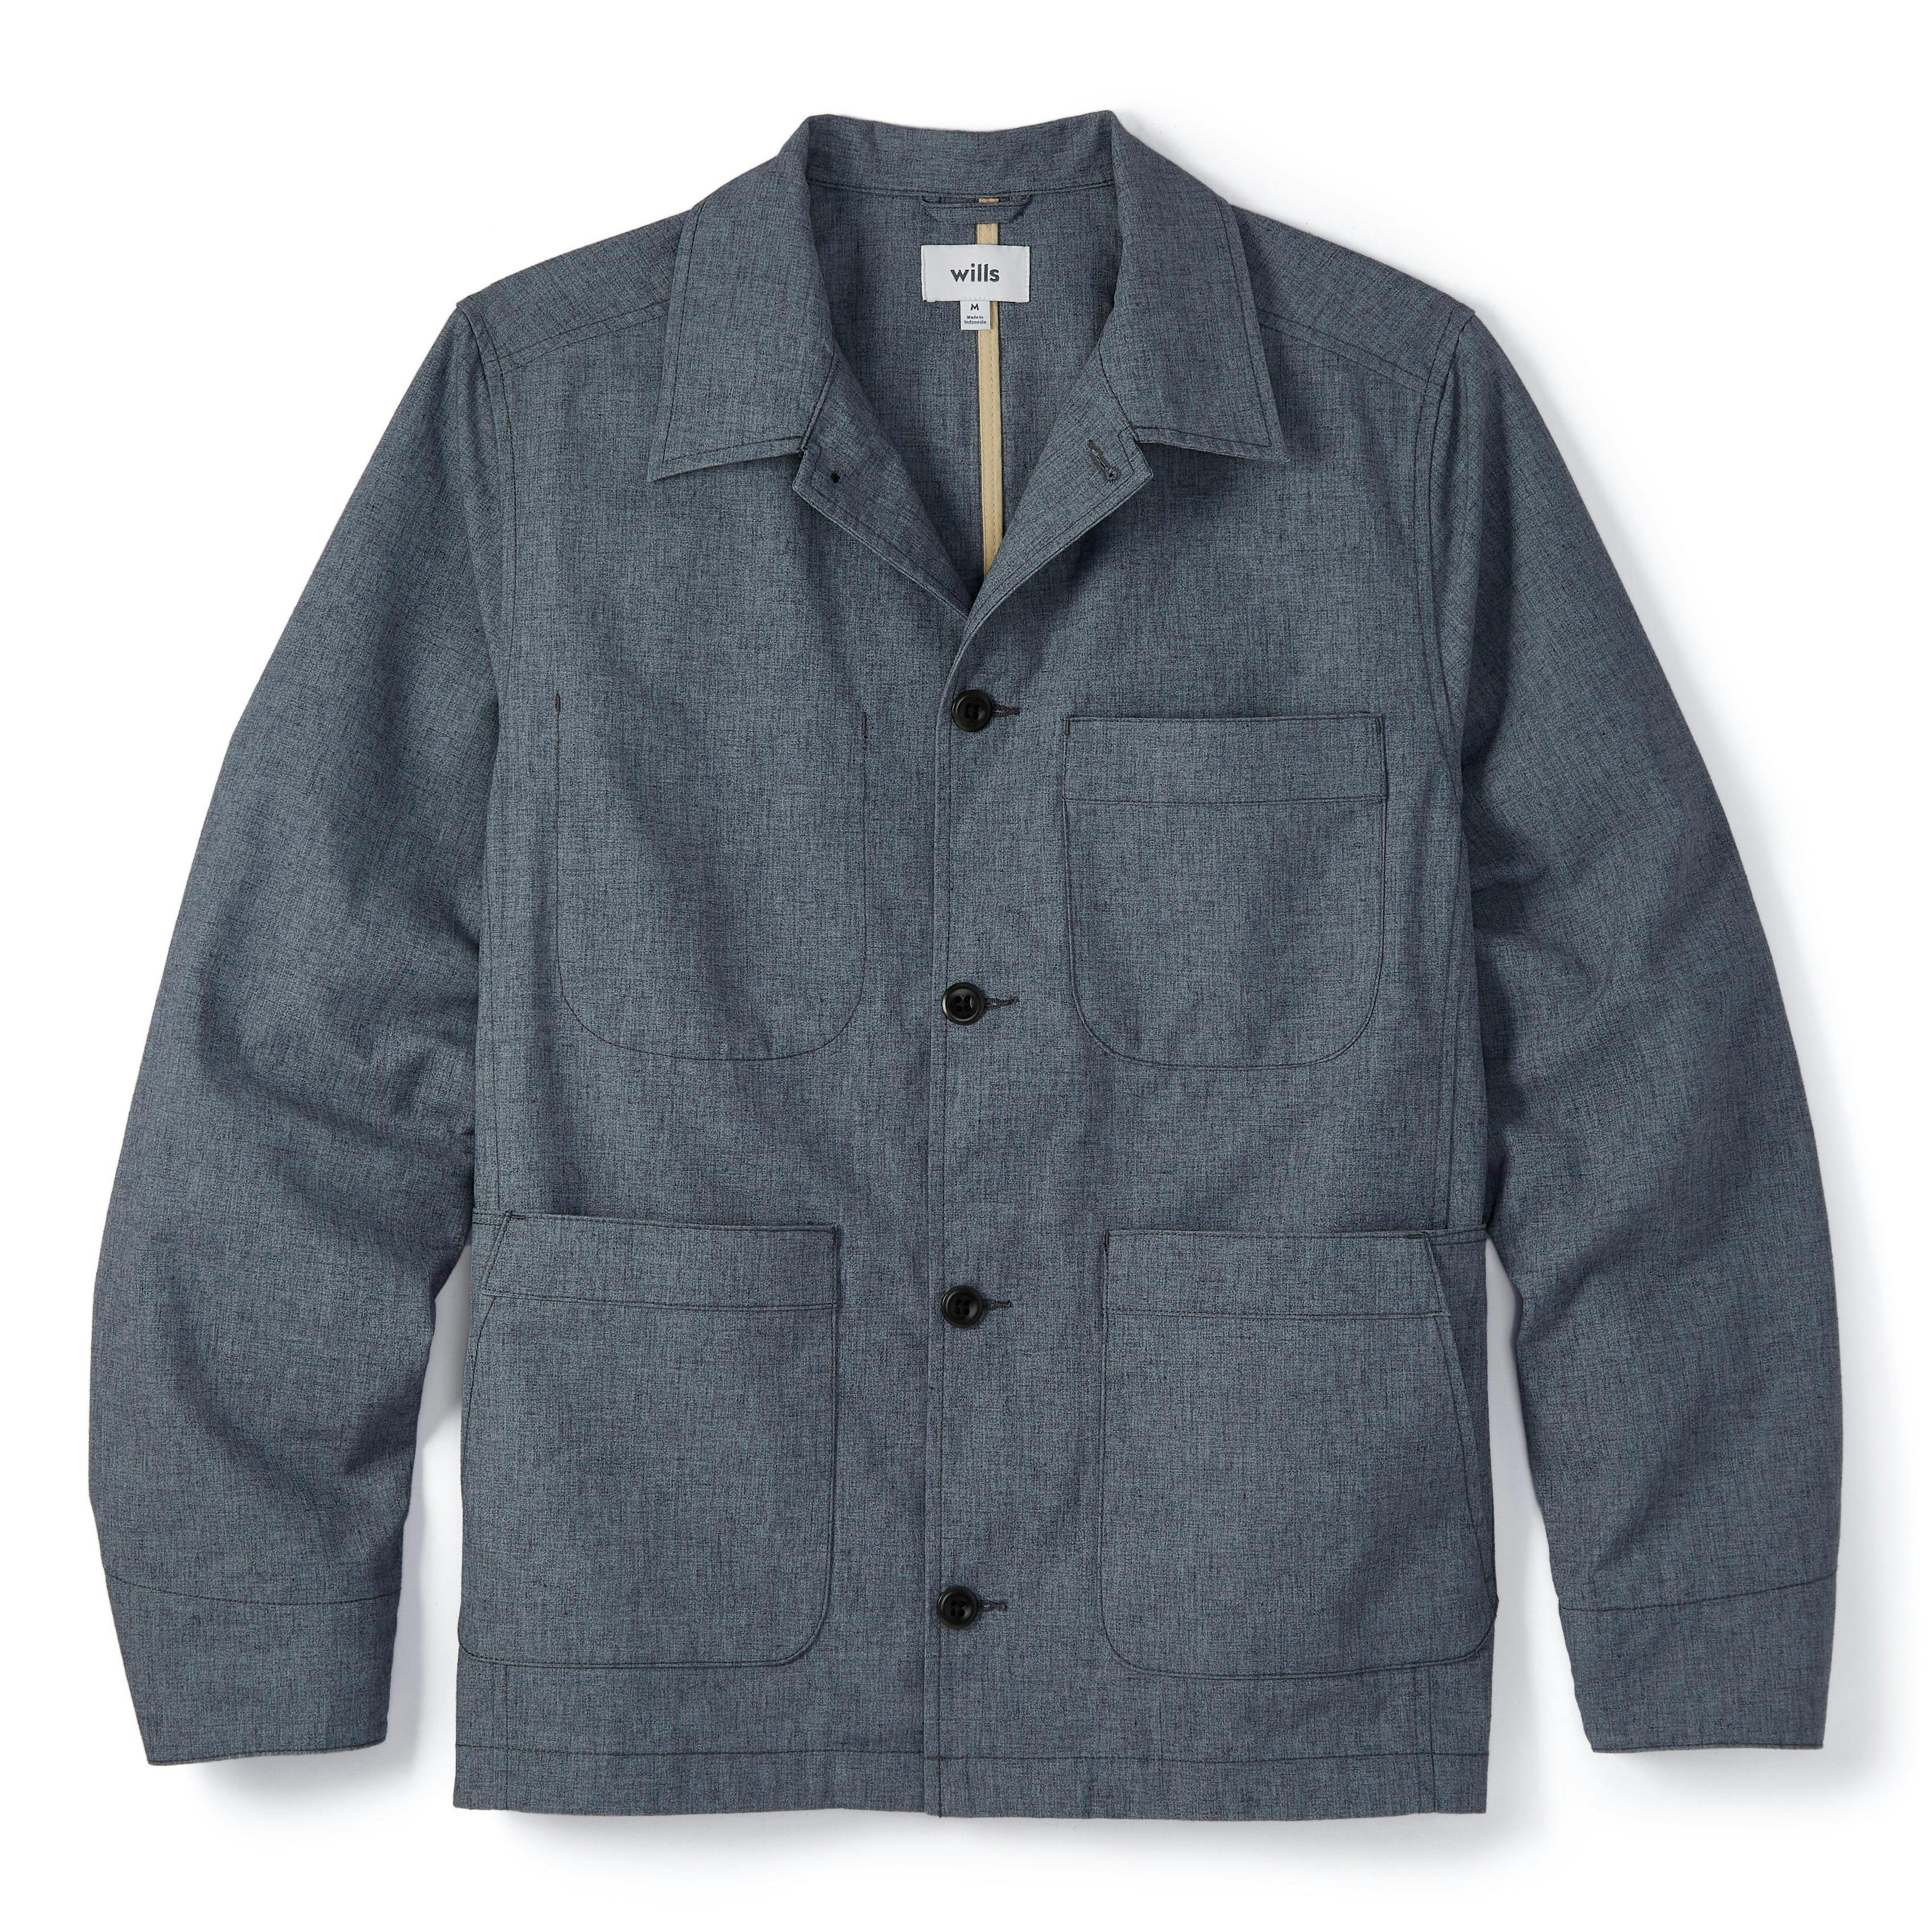 1920s Men’s Coats & Jackets History Wrinkle Free Chore Coat $158,198.00 AT vintagedancer.com